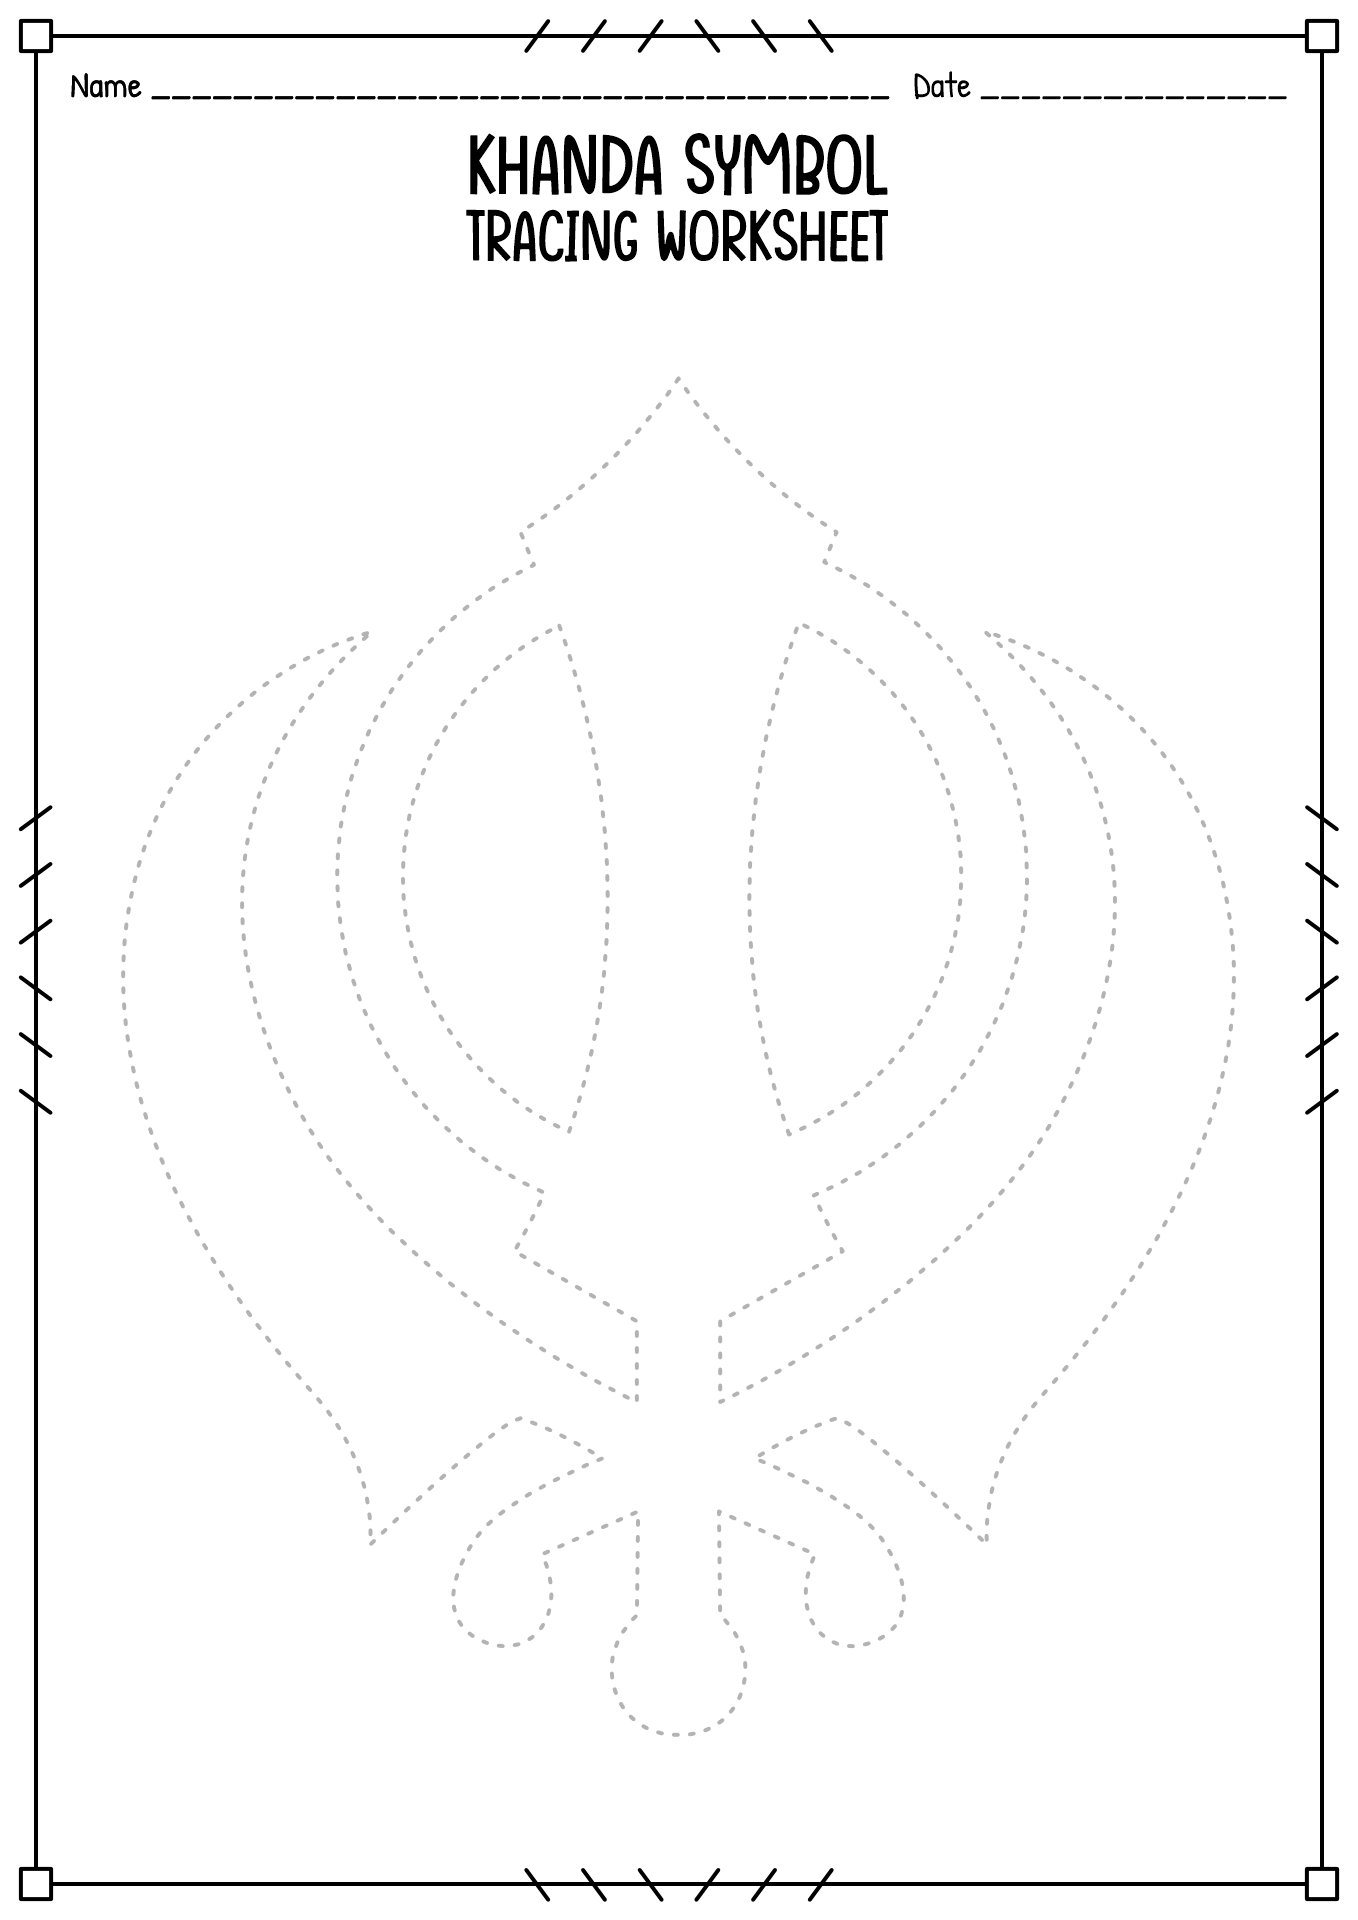 Khanda Symbol Image